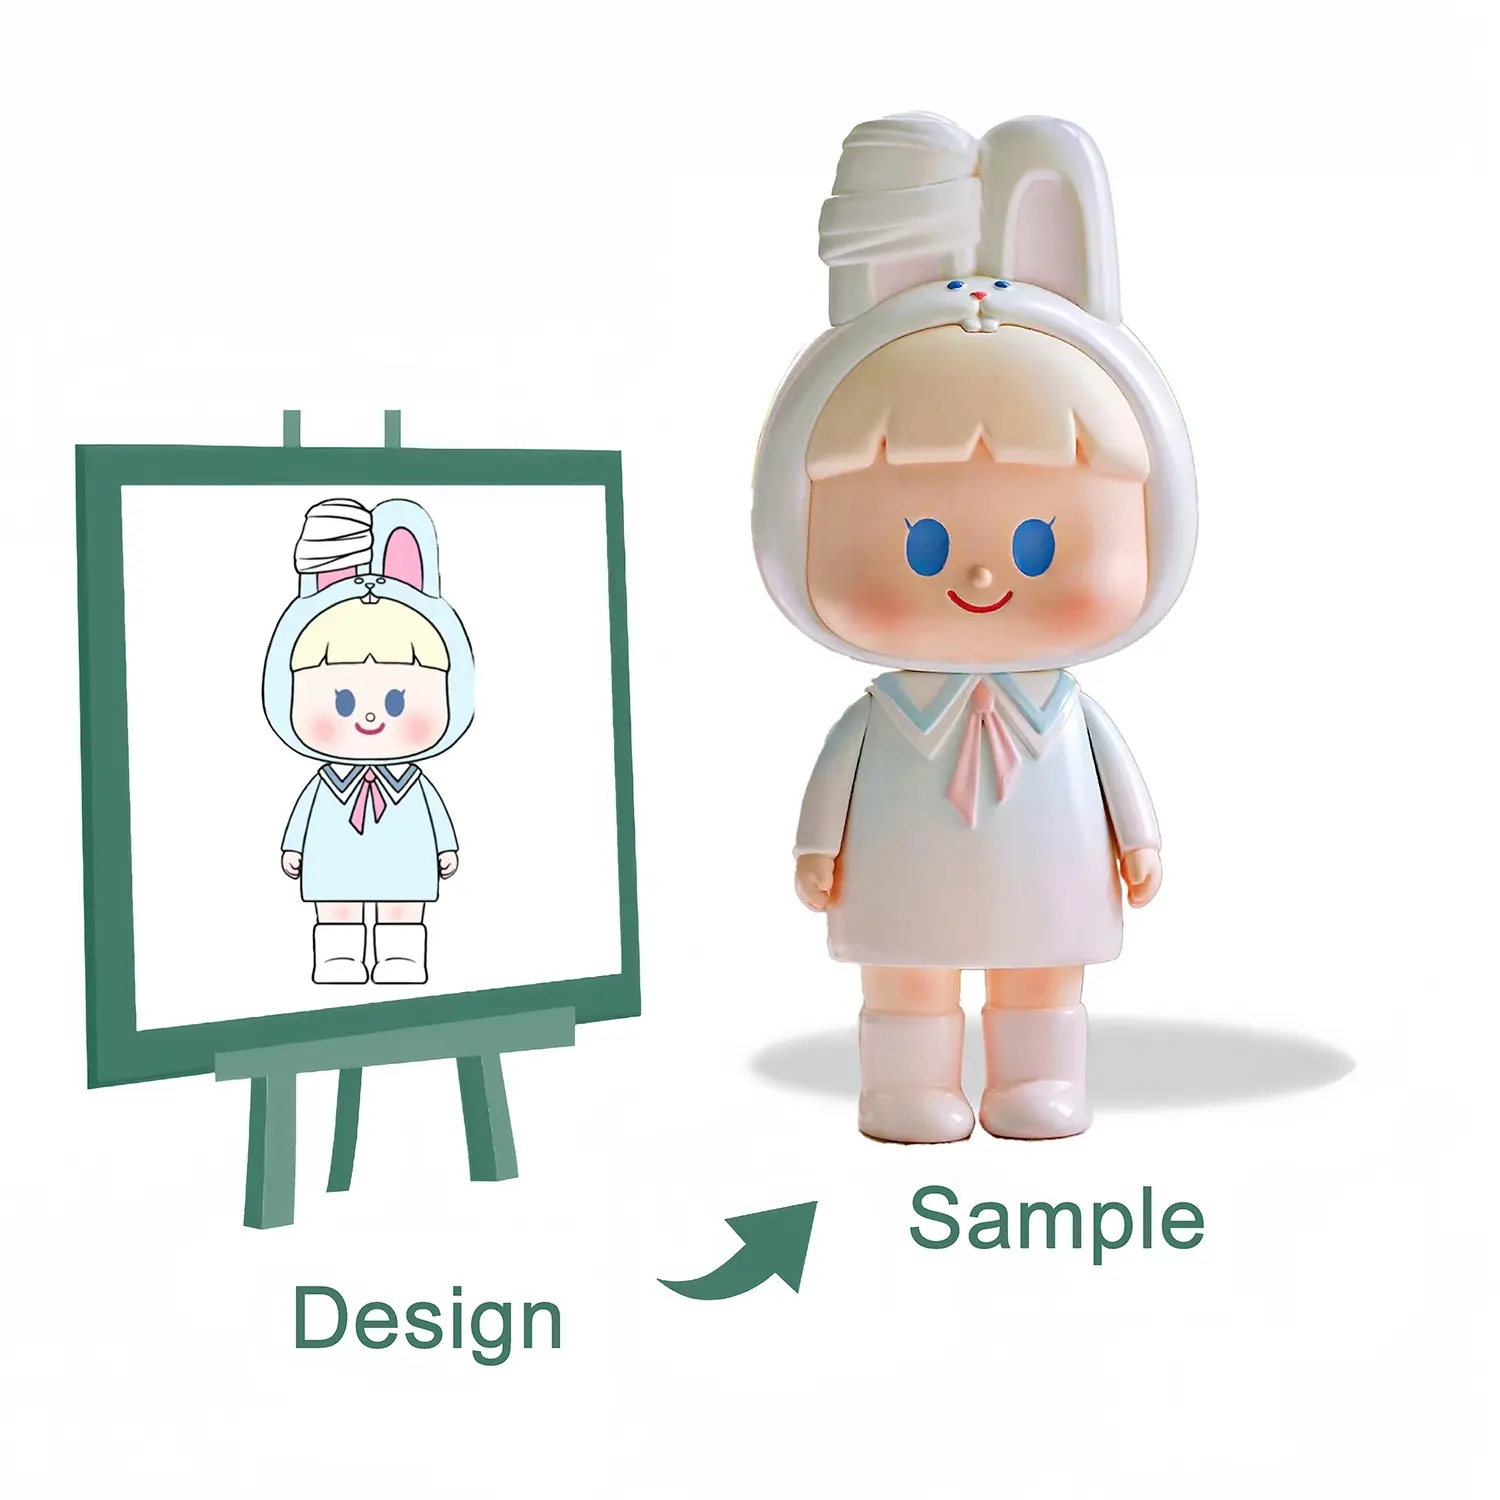 लाइन्ड प्लास्टिक सॉफ्ट रबर 3डी डिज़ाइन विनाइल सिलिकॉन कार्टून खिलौना के साथ अनुकूलित अच्छी गुणवत्ता वाली एक्शन फिगर राल पीवीसी गुड़िया